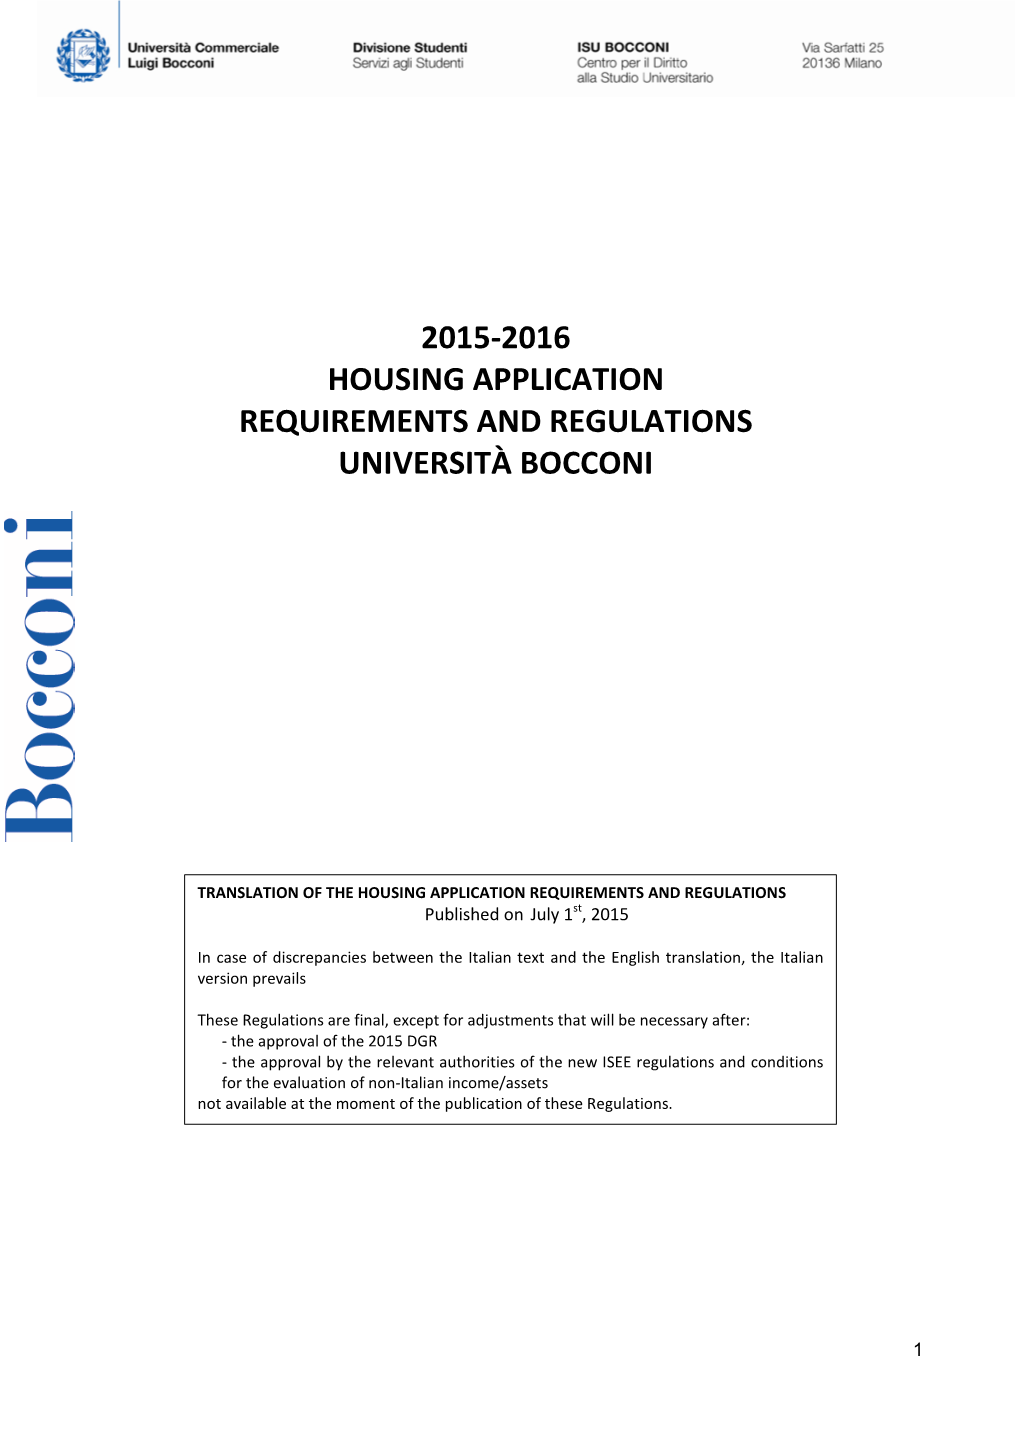 2015-2016 Housing Application Requirements and Regulations Università Bocconi